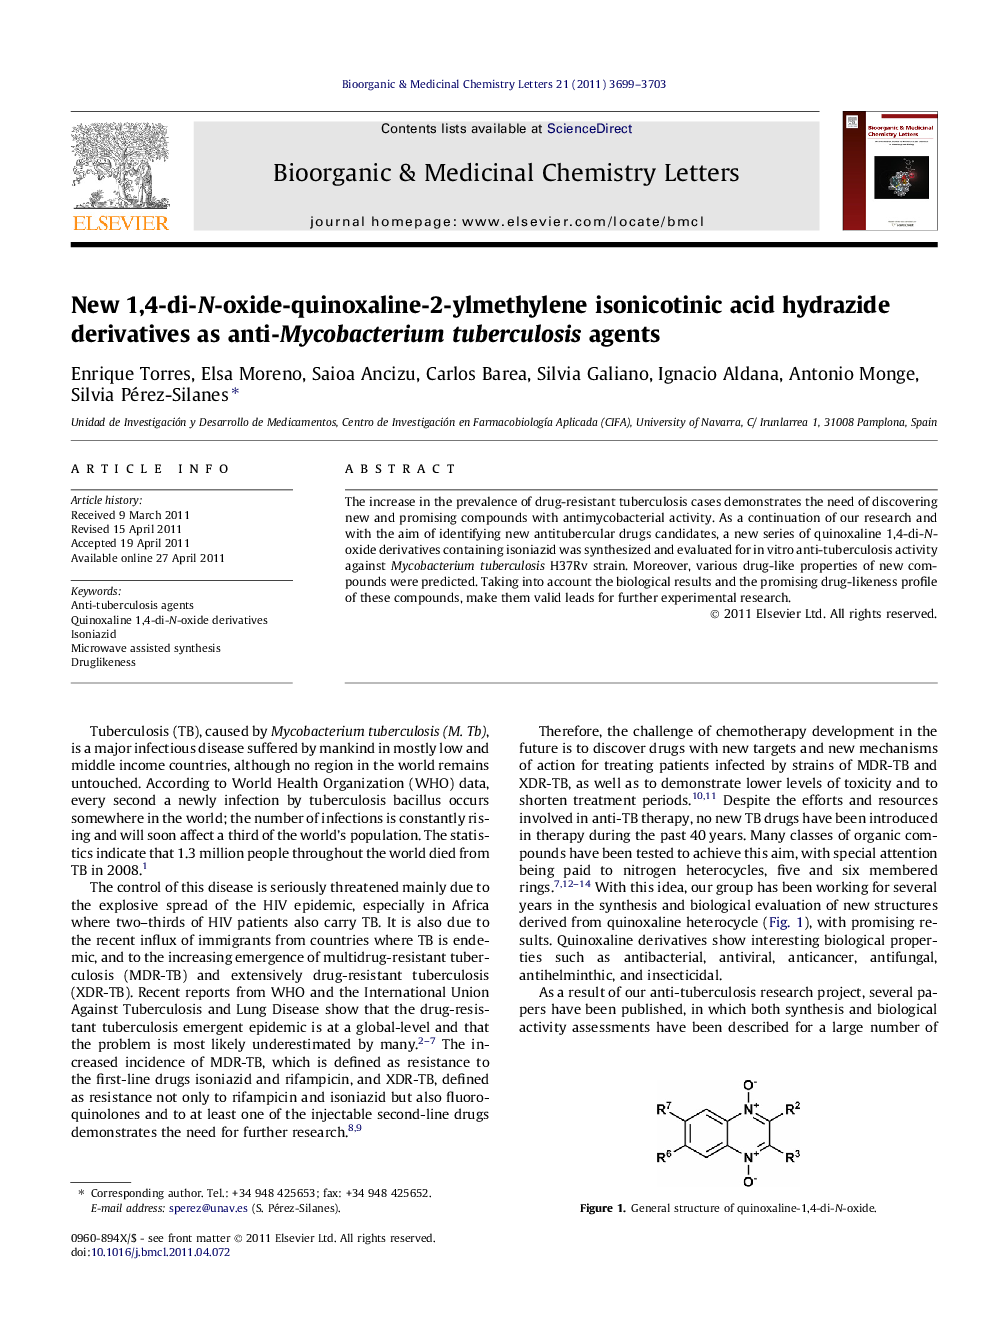 New 1,4-di-N-oxide-quinoxaline-2-ylmethylene isonicotinic acid hydrazide derivatives as anti-Mycobacterium tuberculosis agents